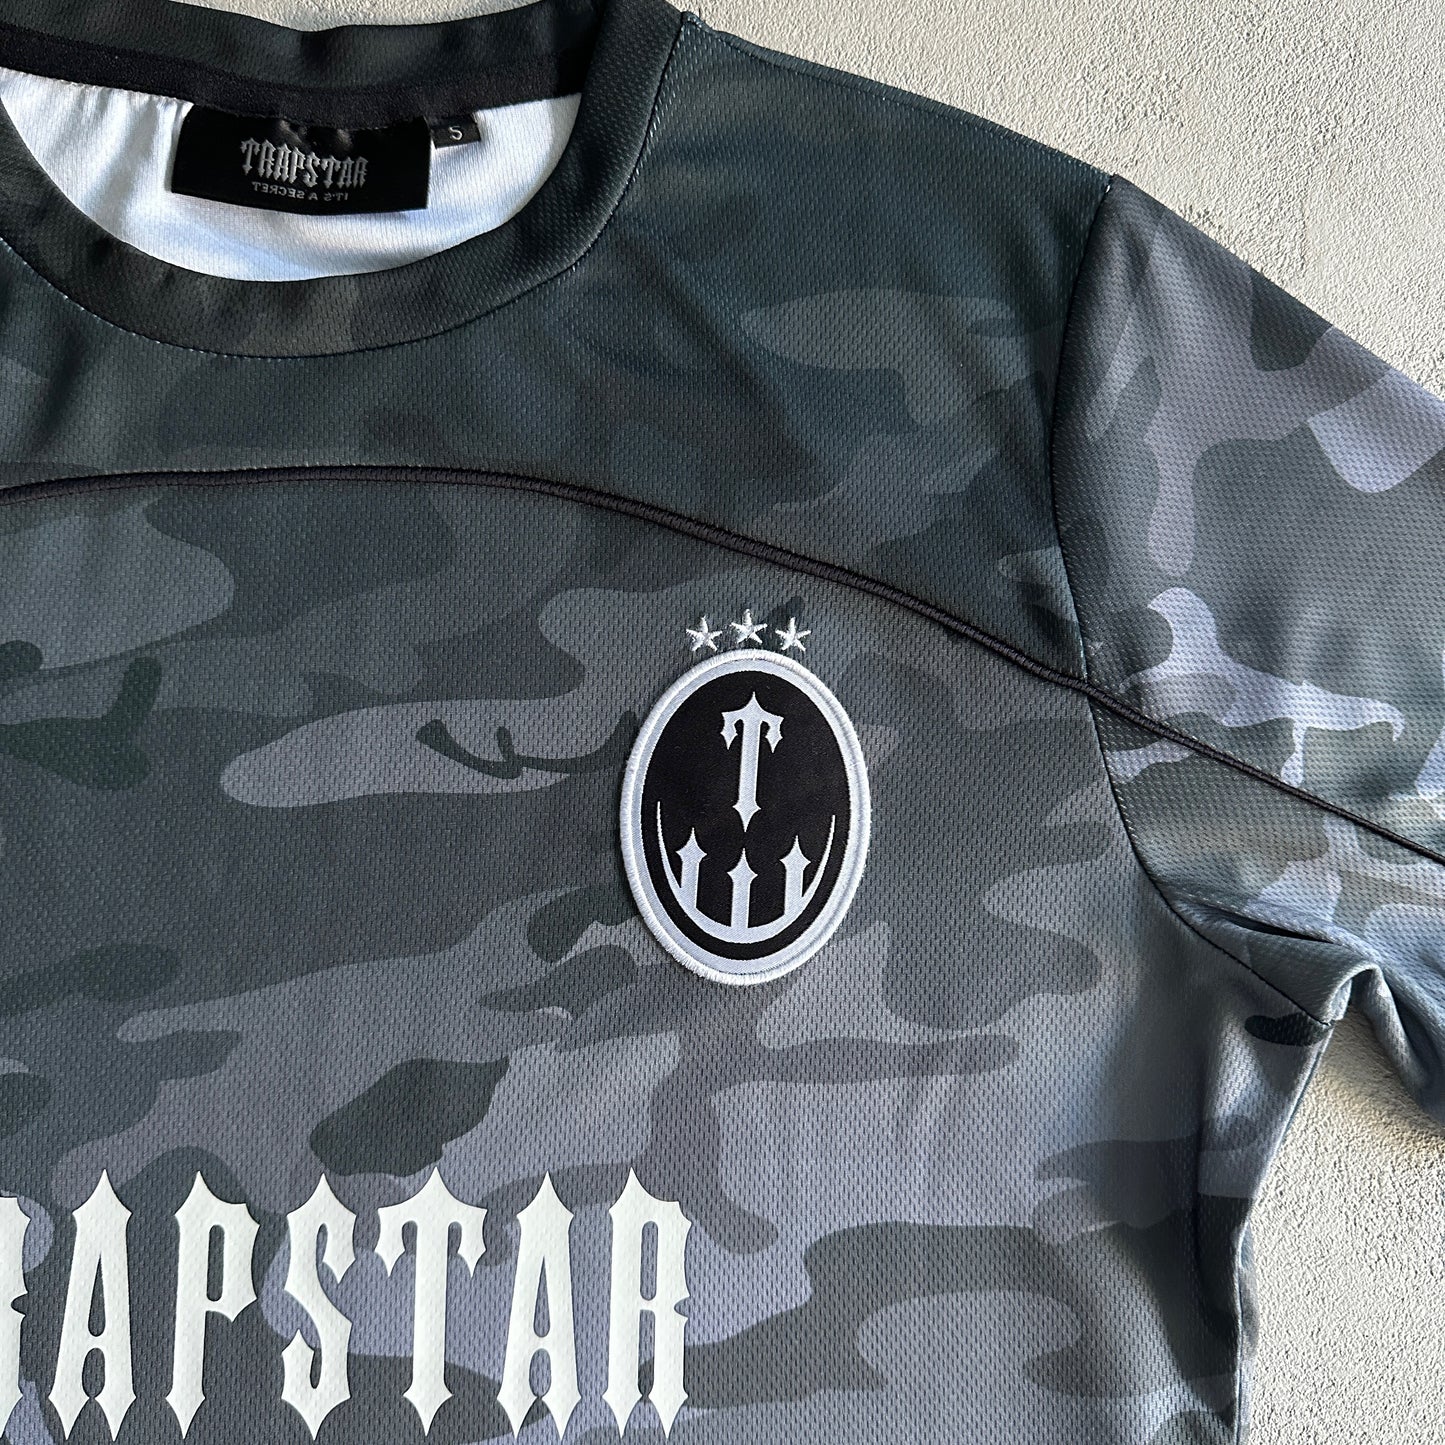 Camiseta de fútbol Trapstar Monogram Irogate - Camuflaje negro